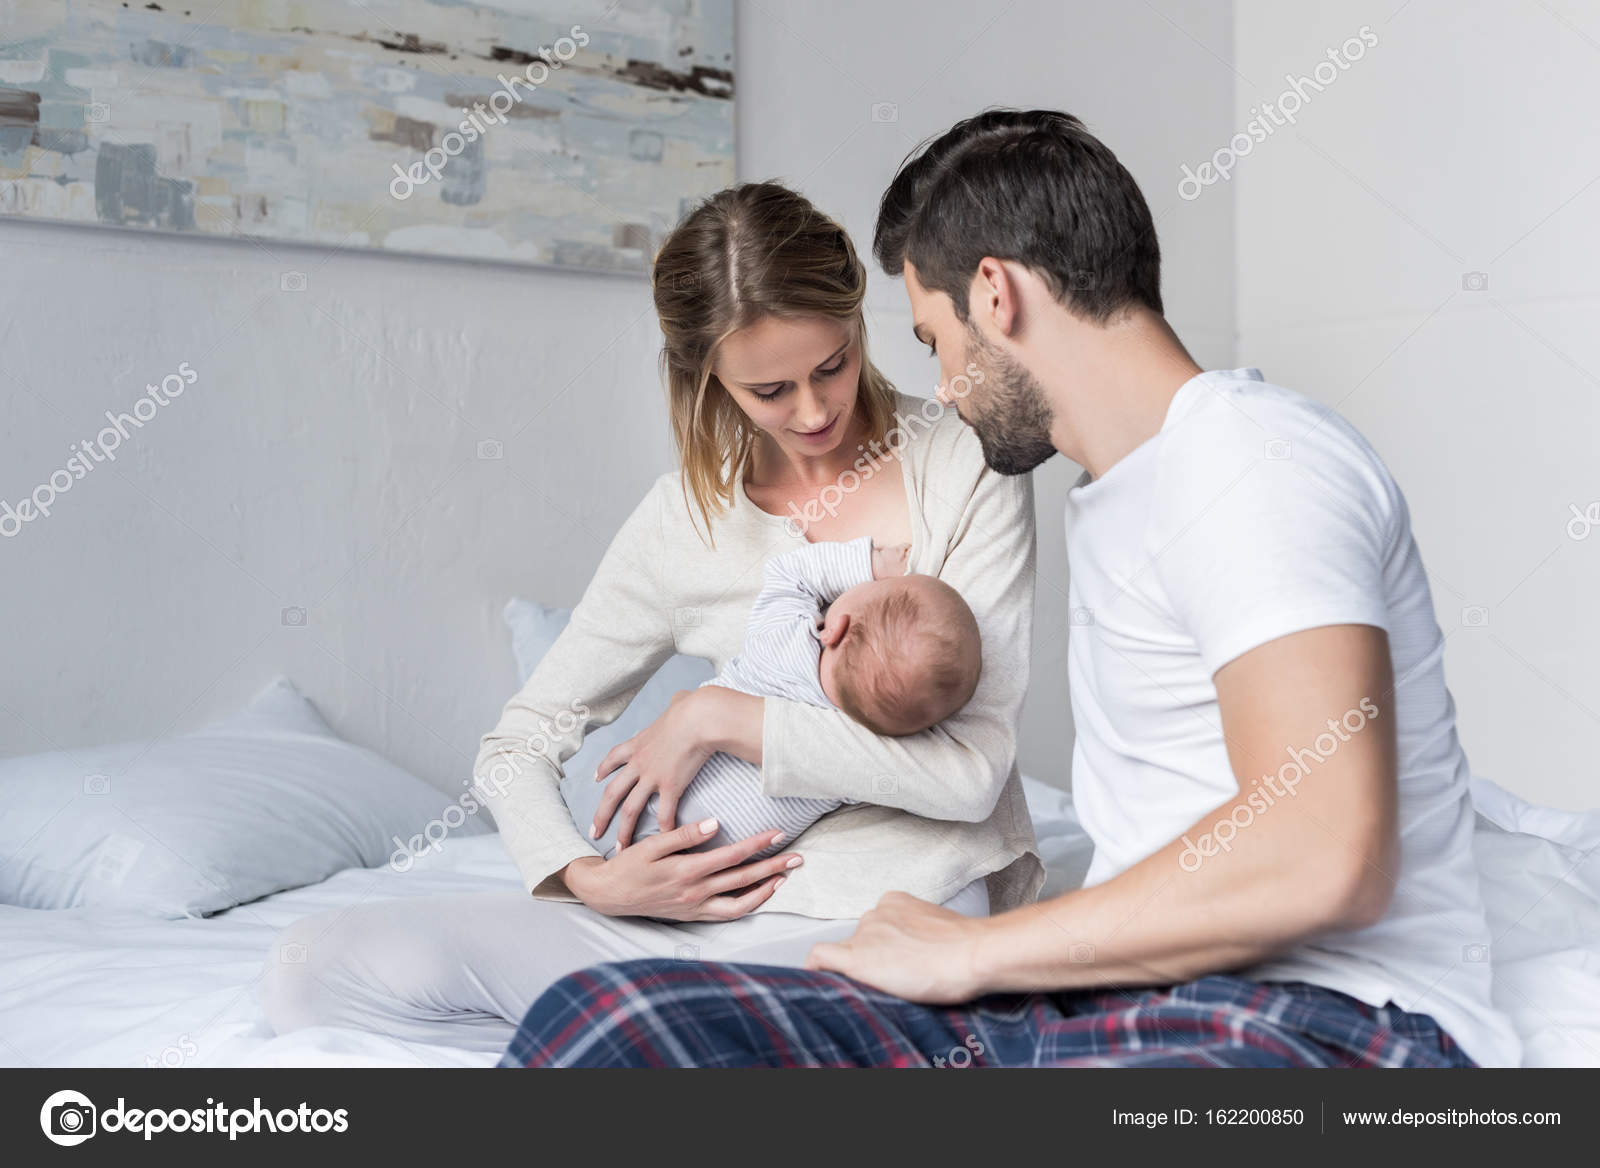 Breastfeeding Pictures, Images, Stock Photos | Depositphotos®